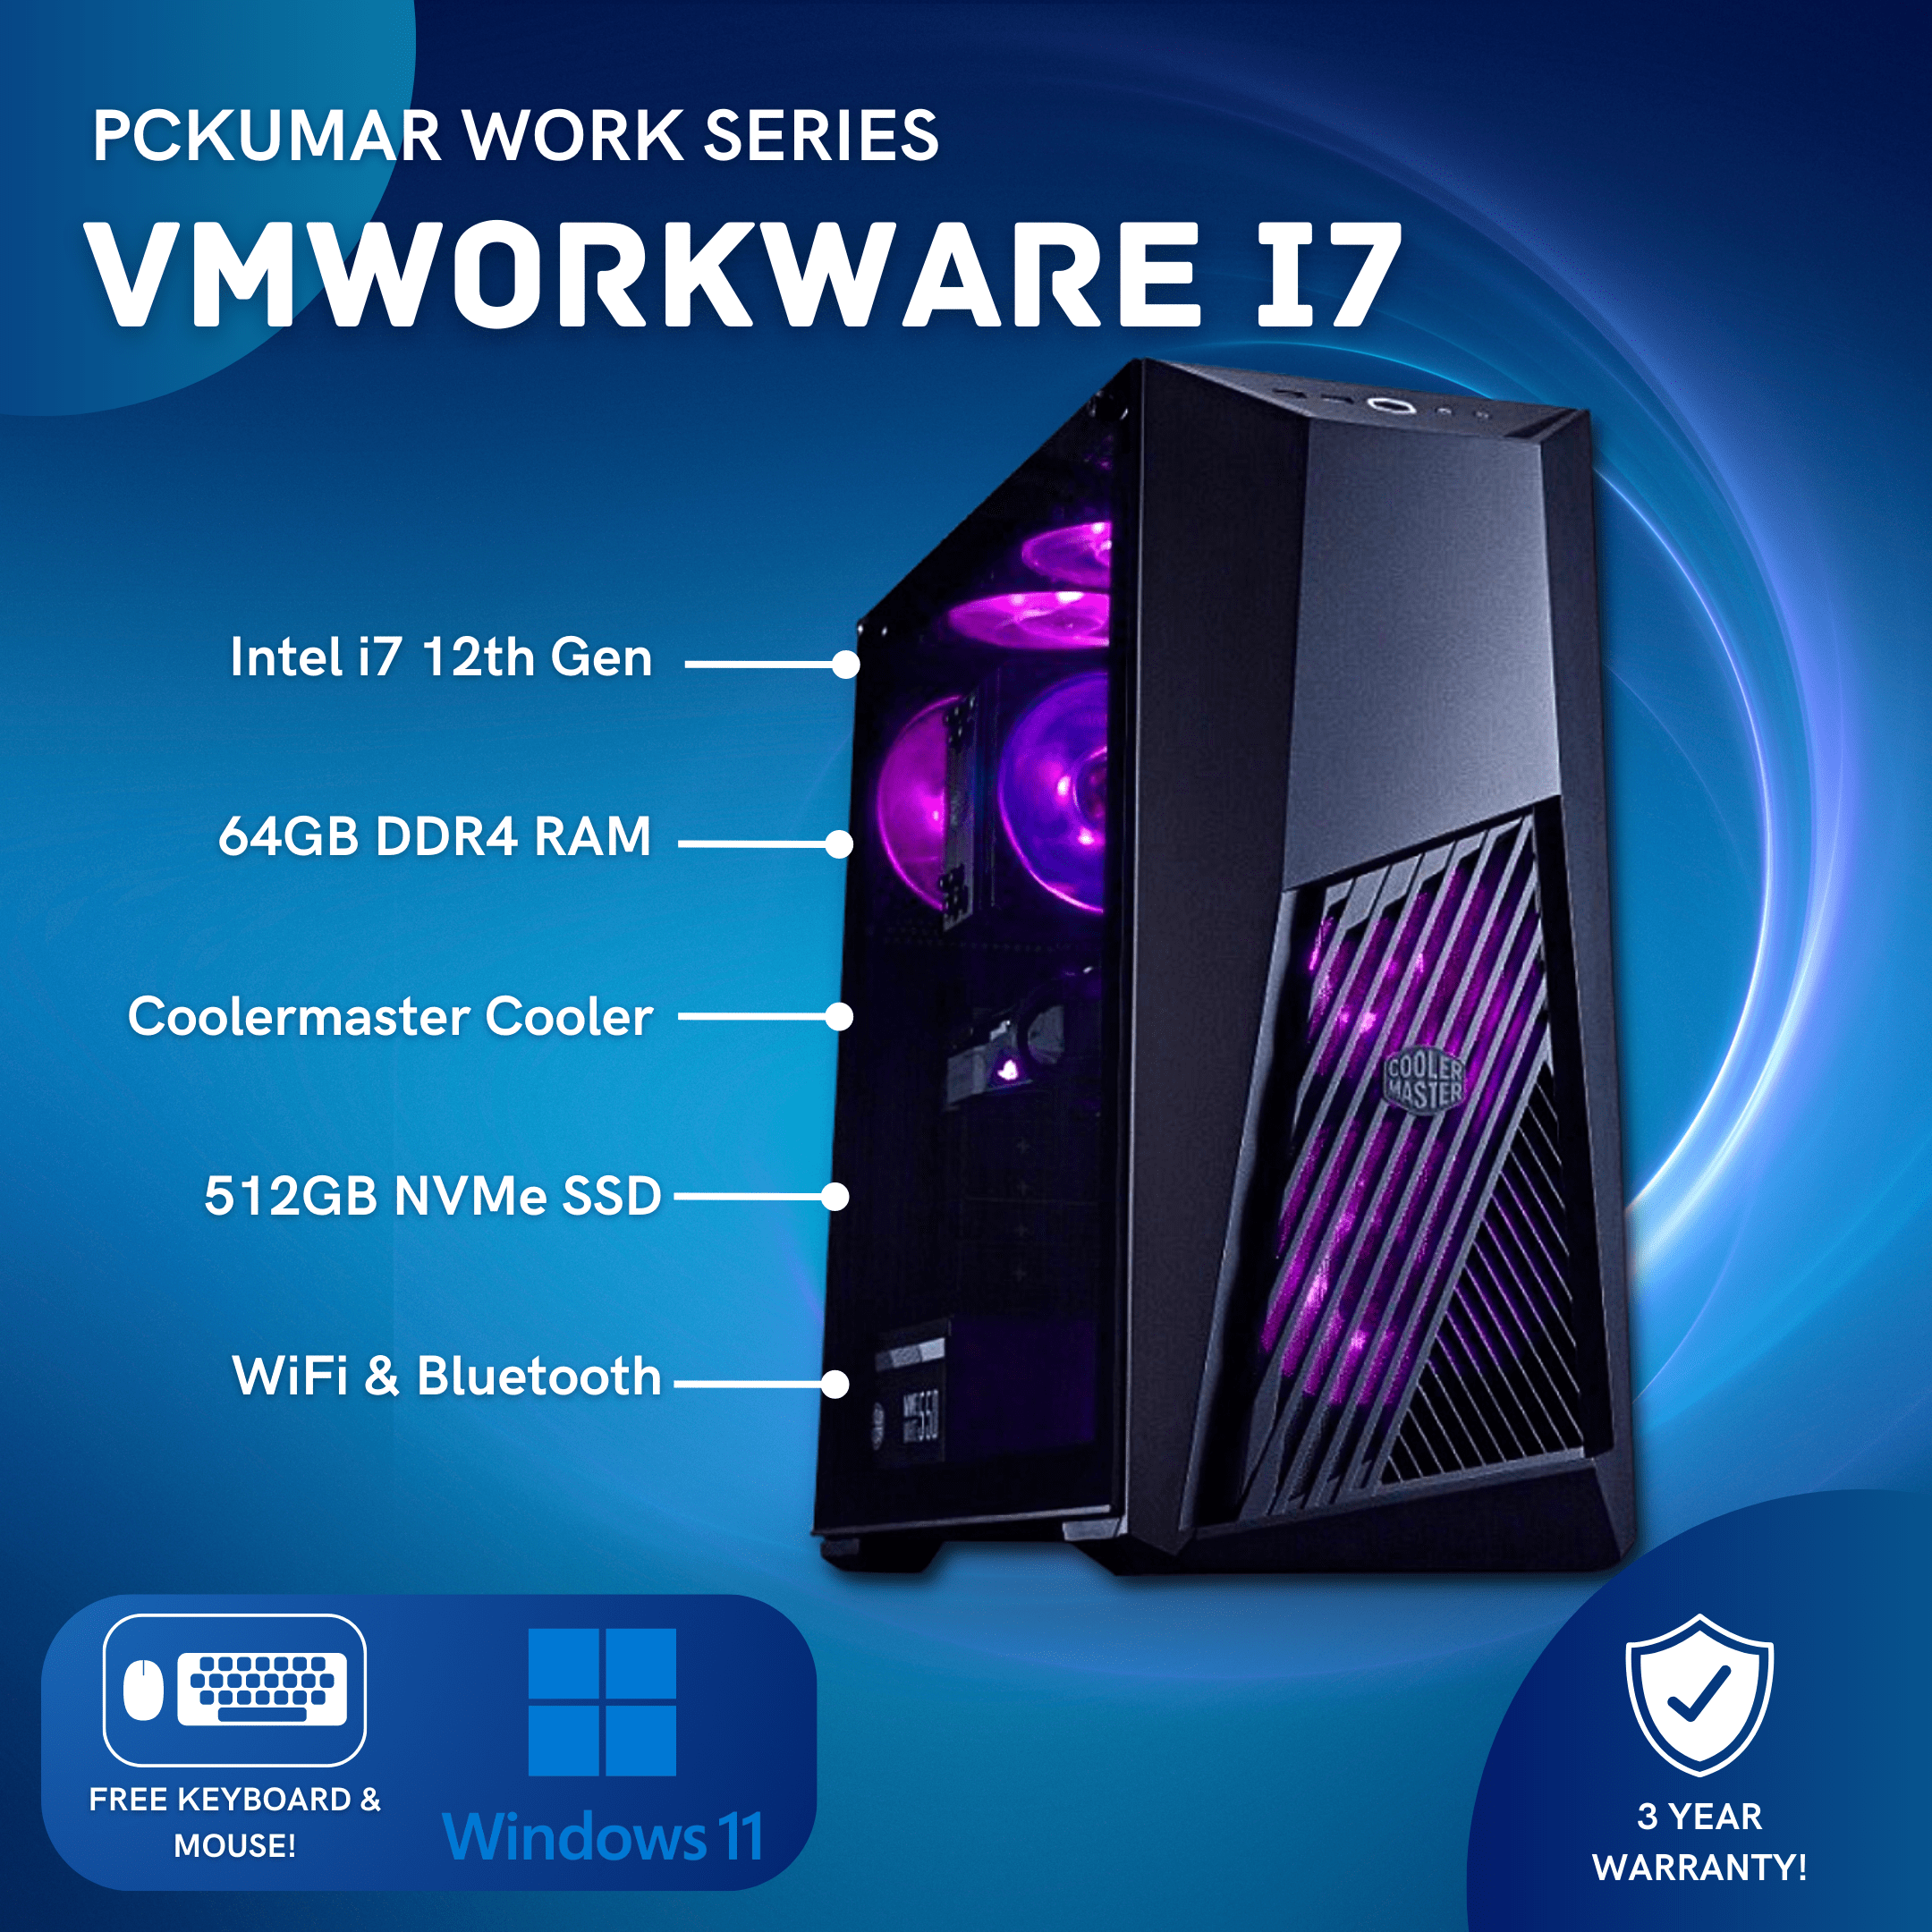 Vmworkware i7 12th Gen PC for 74999/-